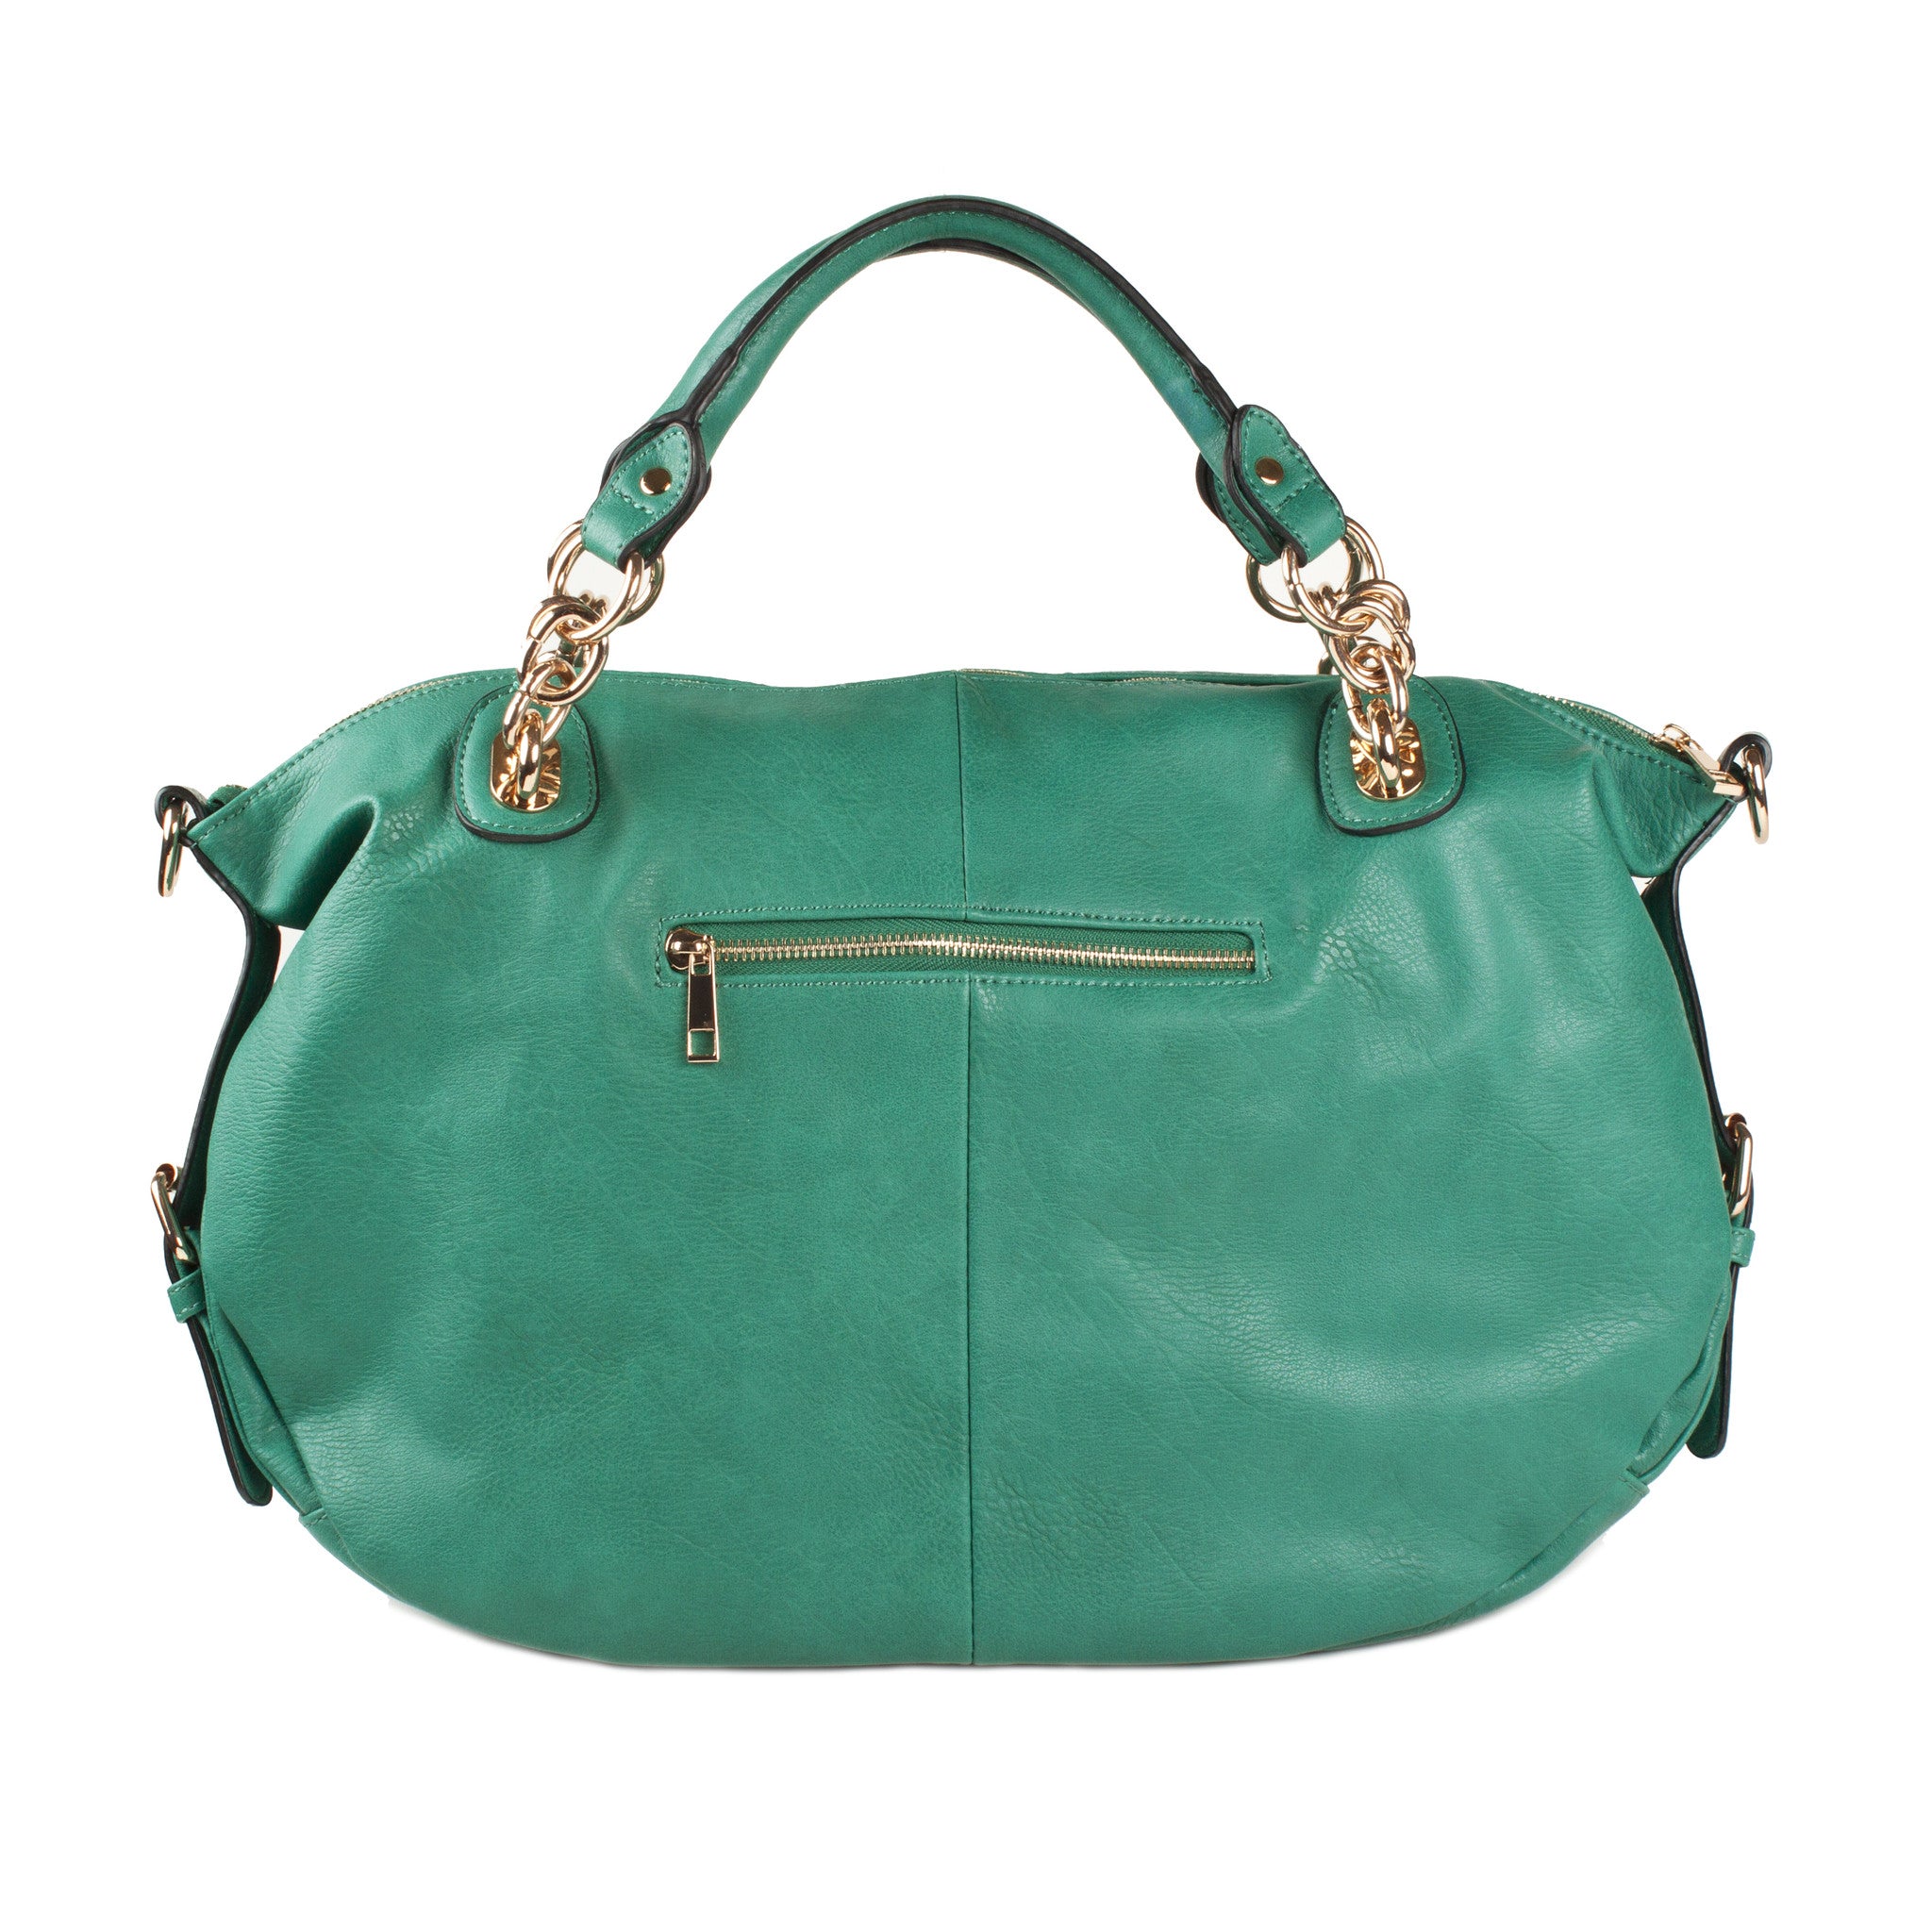 Moda Luxe Teal Van Shoulder Bag, Best Price and Reviews